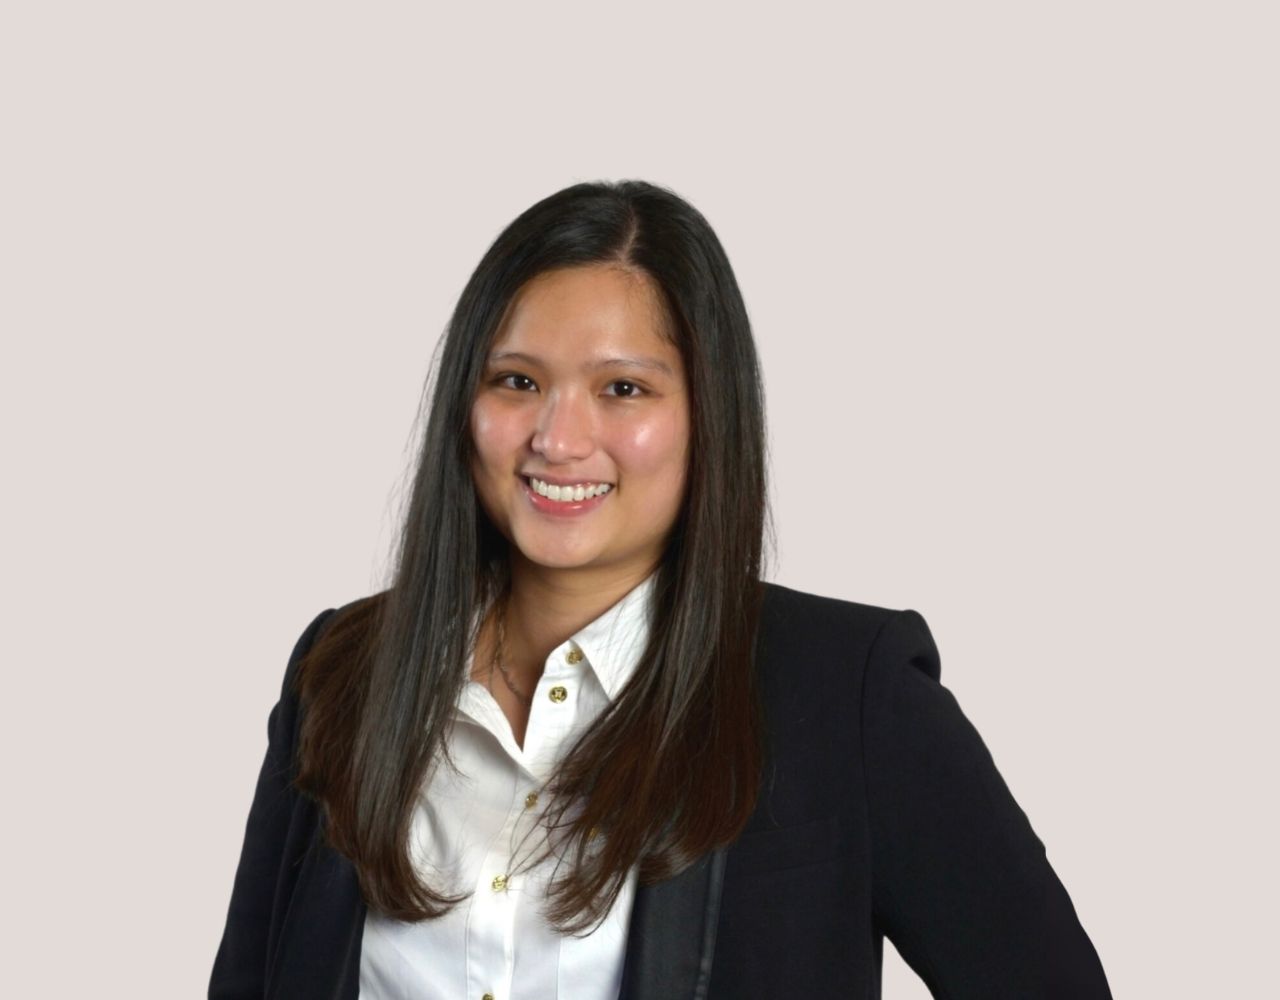 Thea Mispenas - Director for Finances and Administration, Tofer & Associates